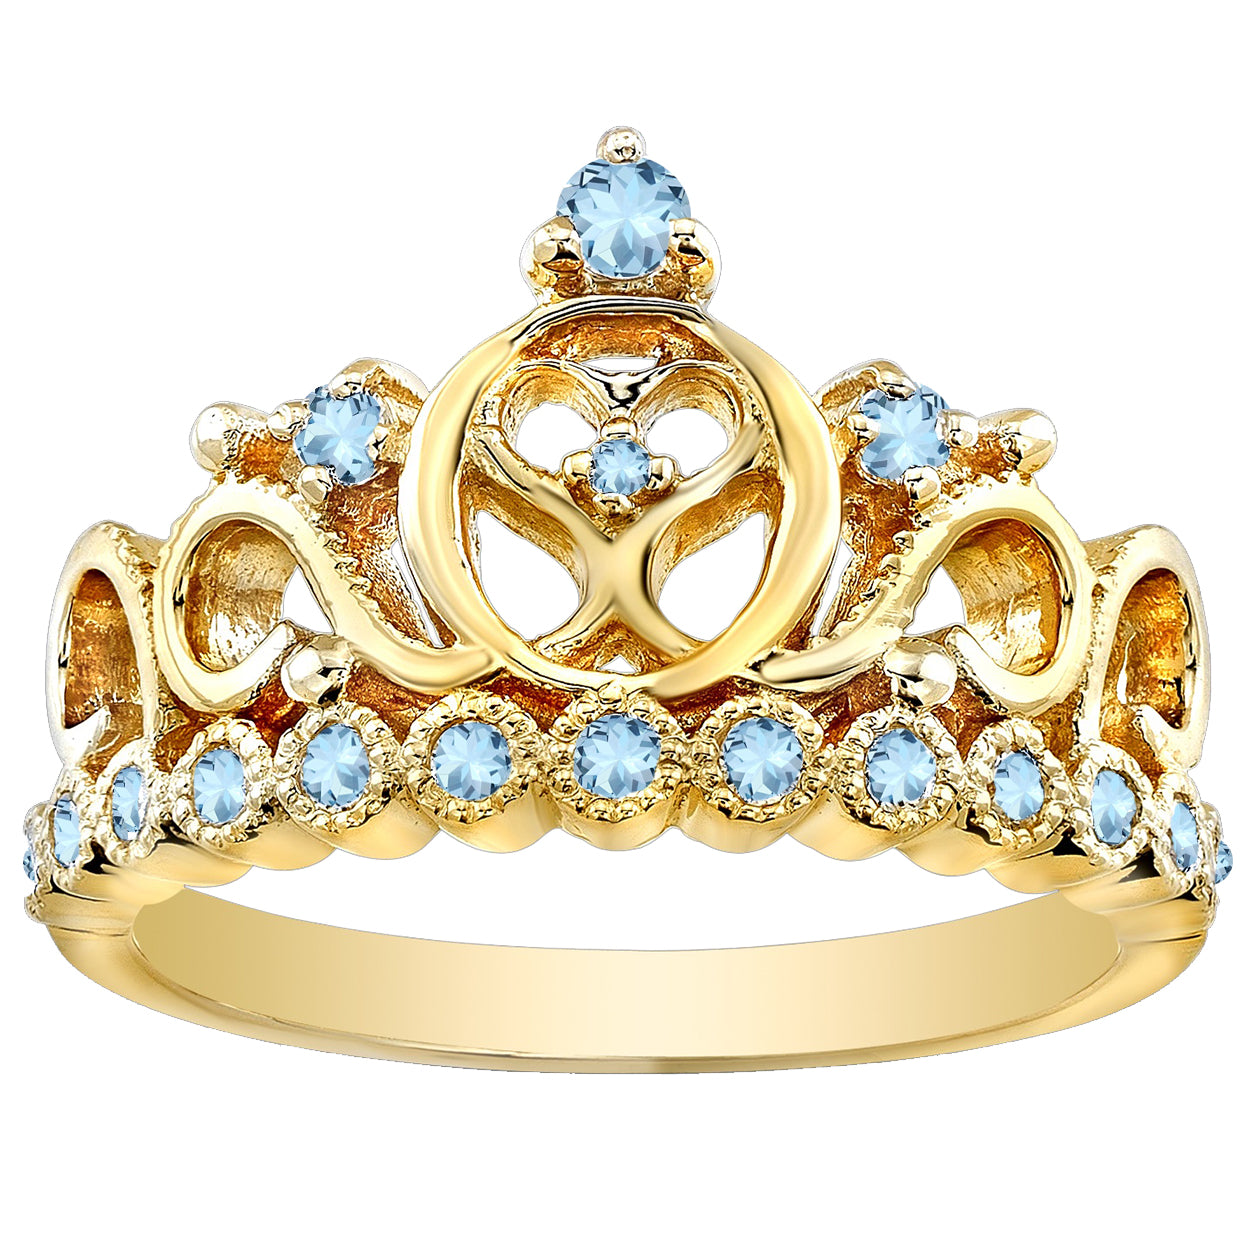 14K Gold Princess Heart Crown Ring